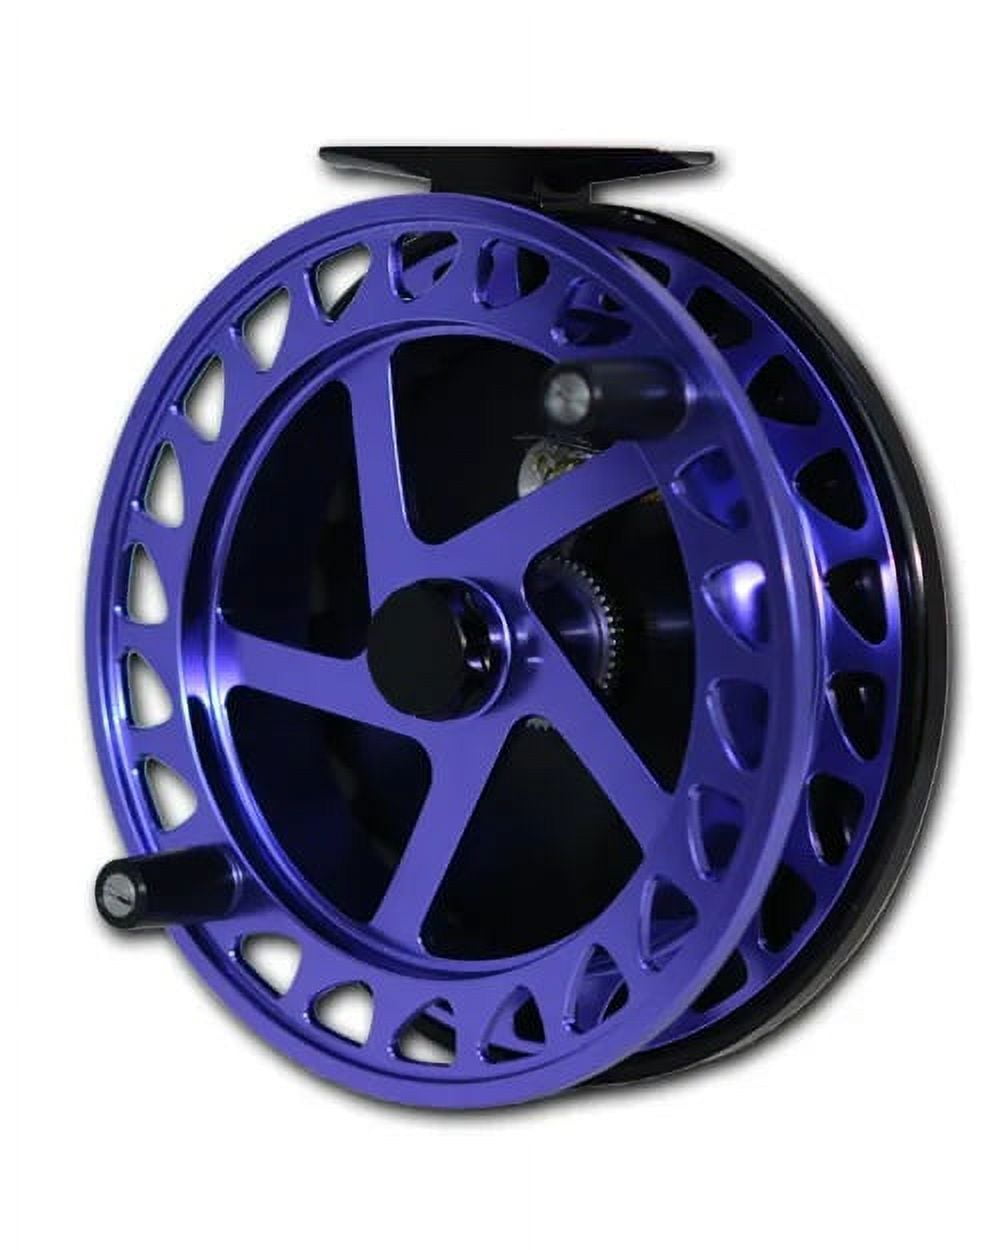 Raven Helix XL Float/Centerpin Fishing Reel 5 1/8 Assorted Colors